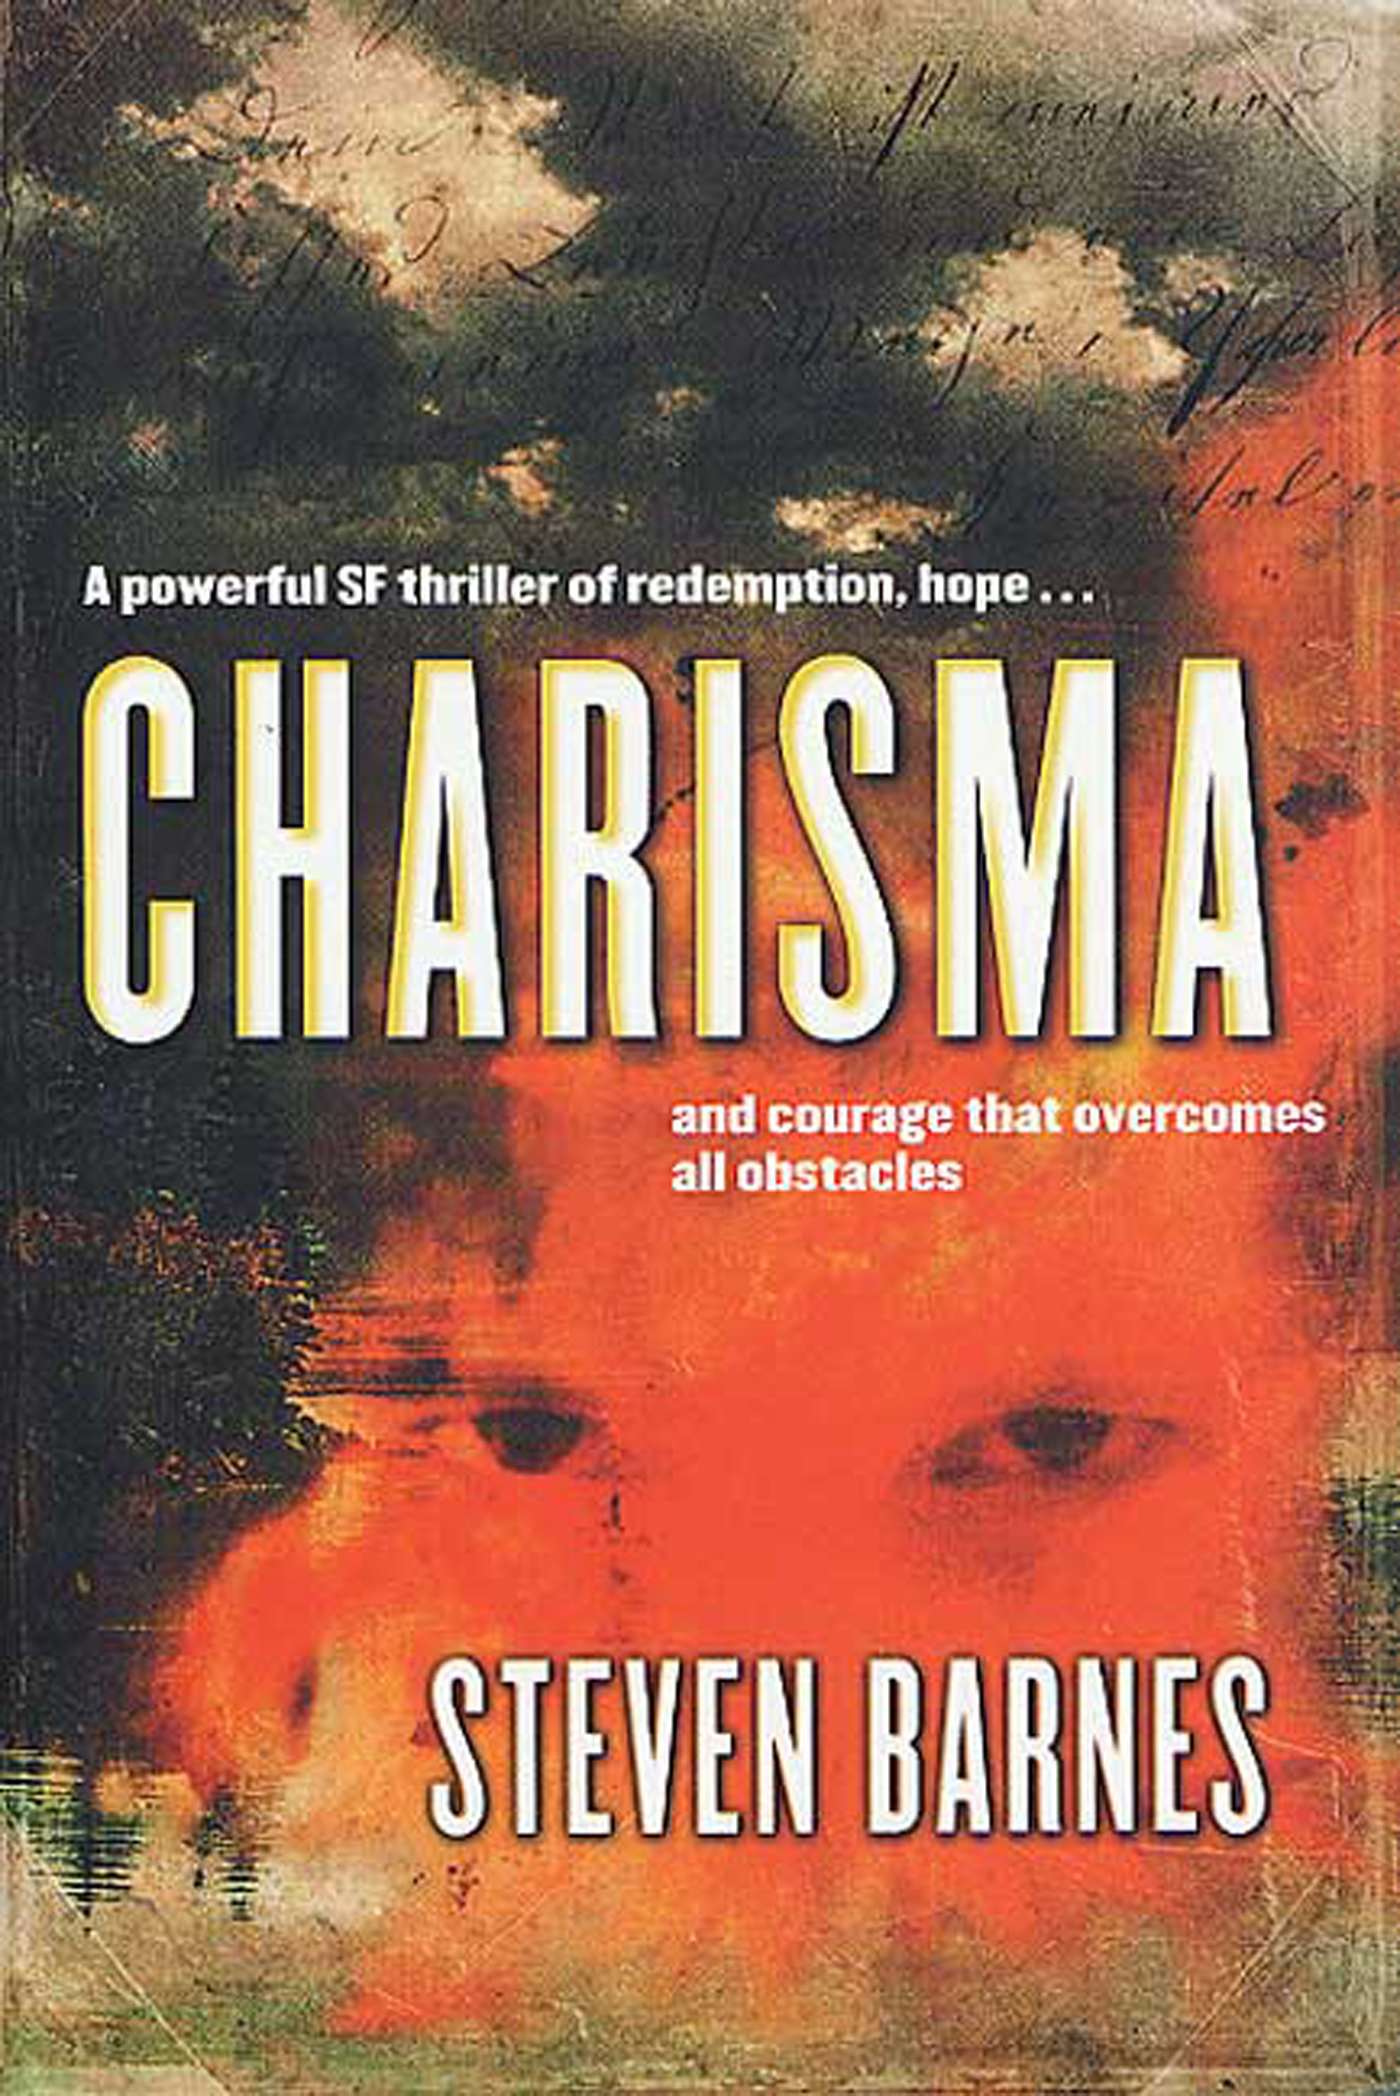 Charisma by Steven Barnes